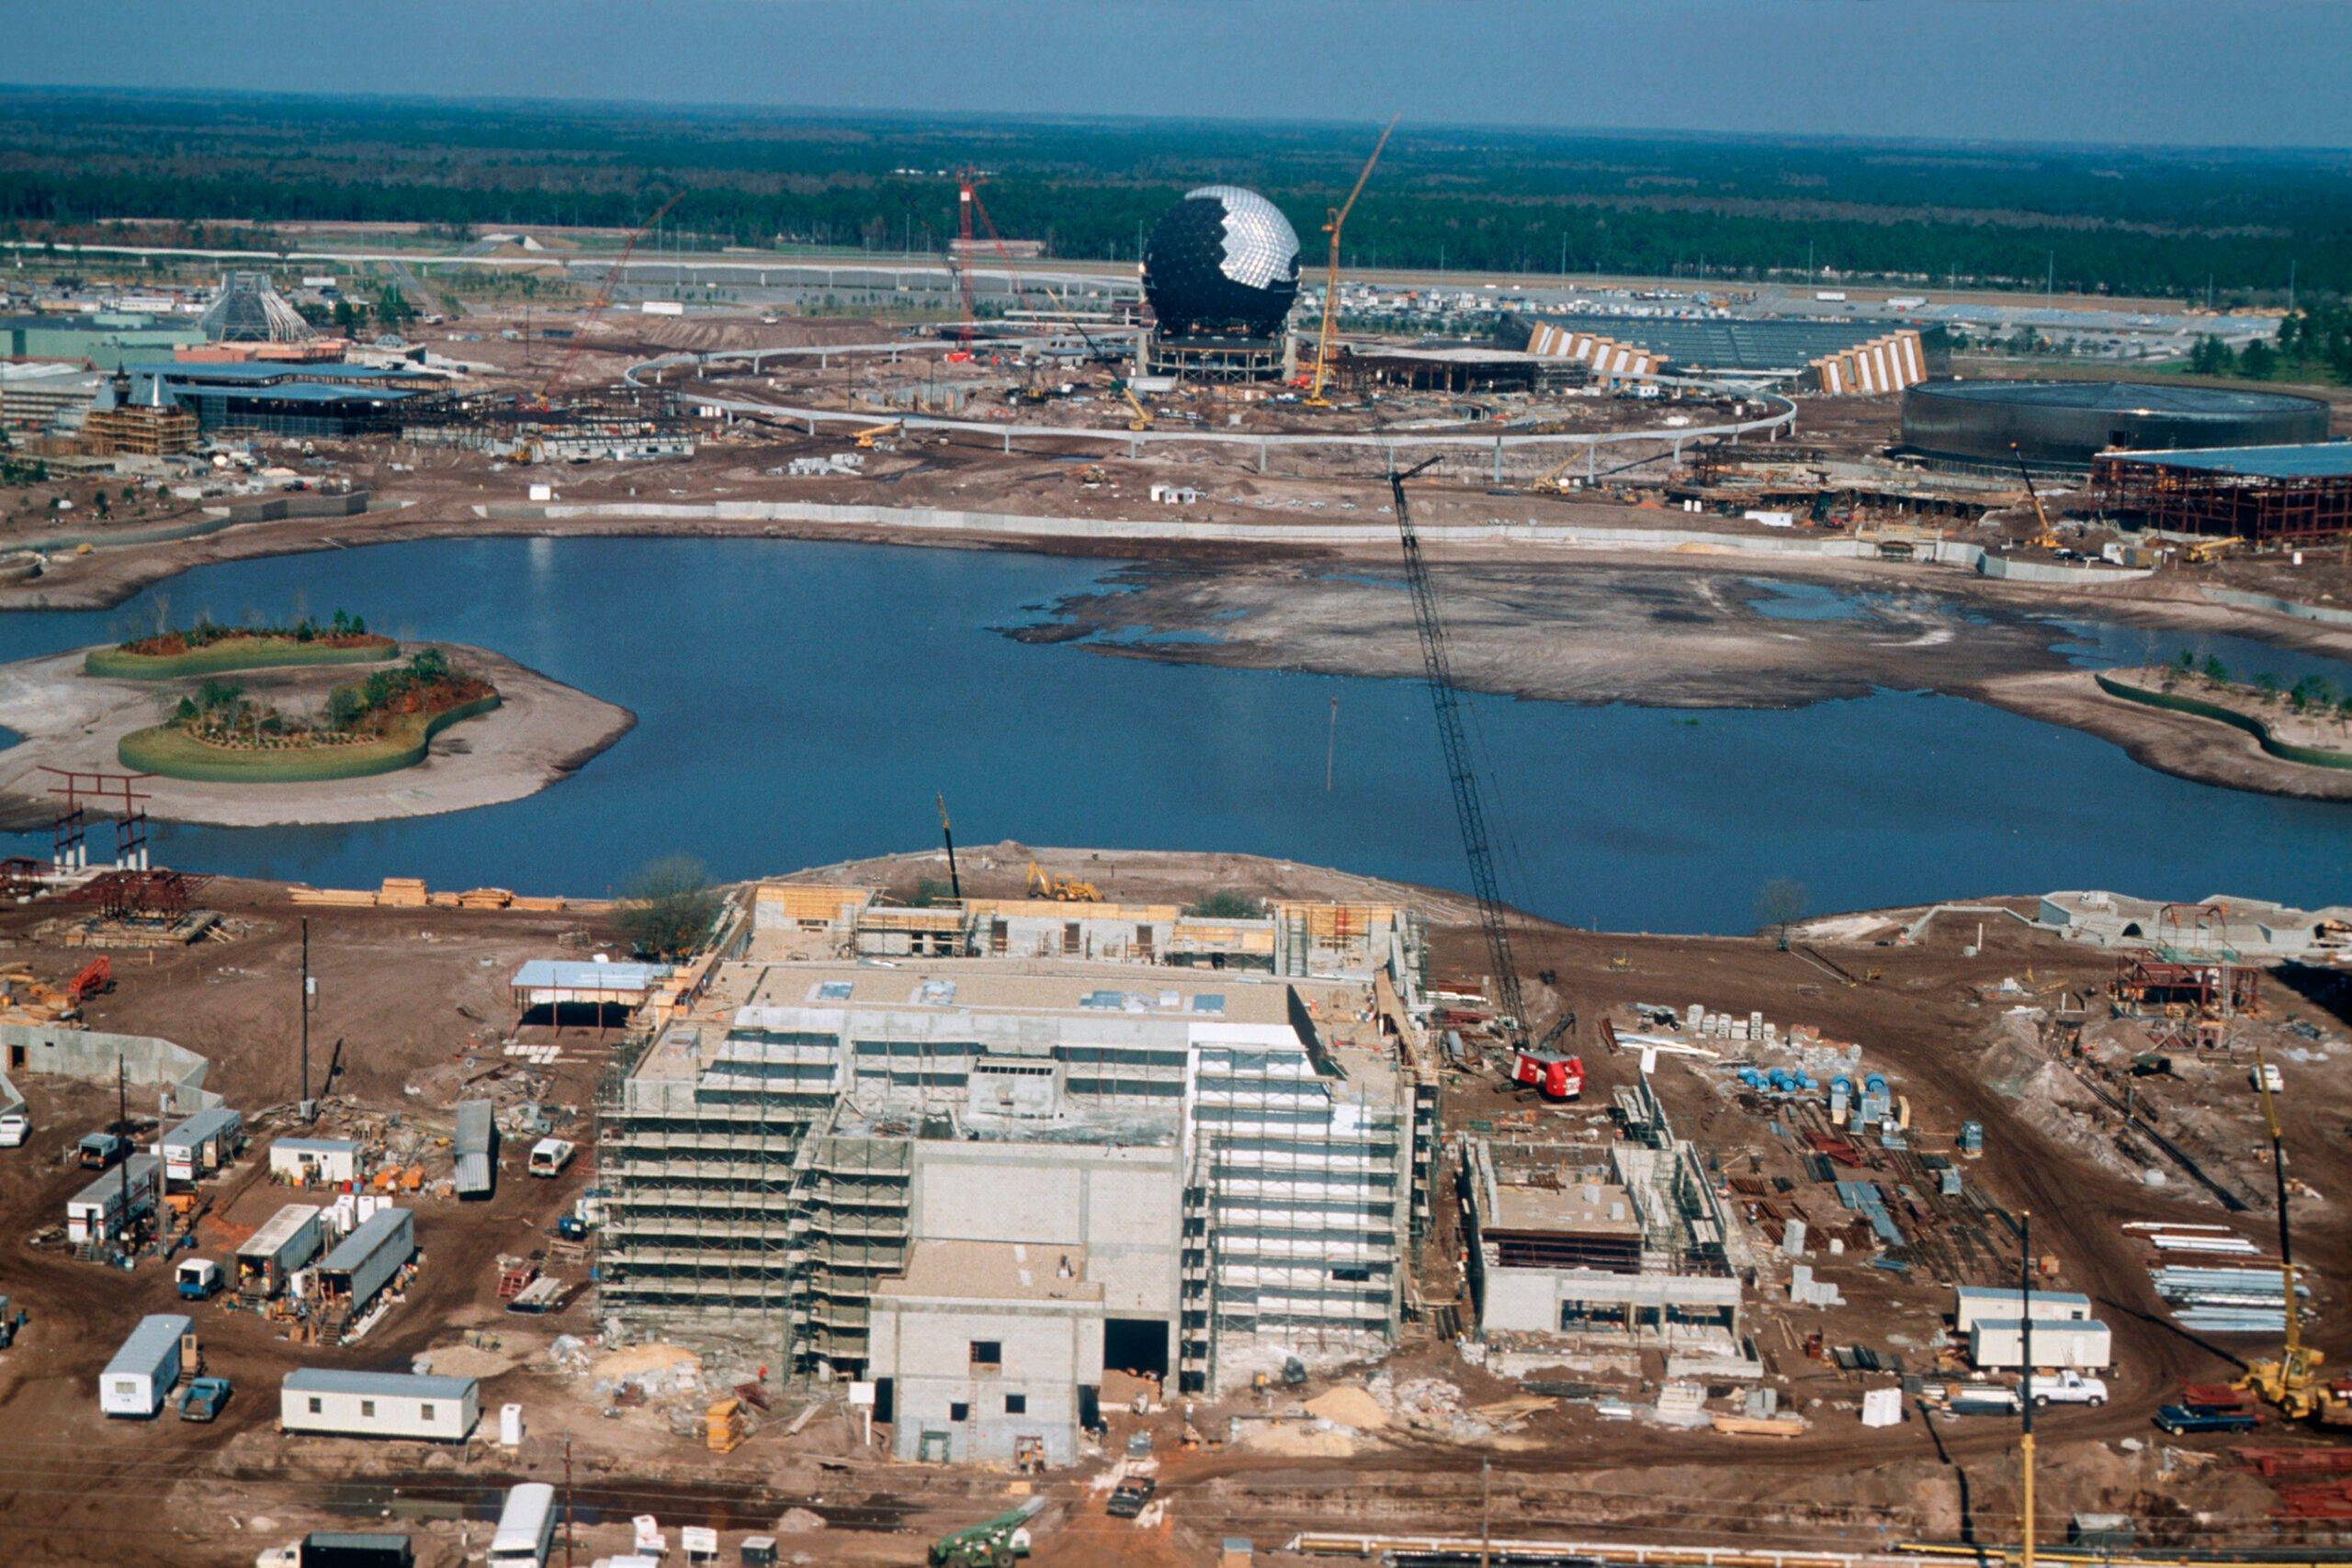 EPCOT under construction in 1982 at Walt Disney World Resort